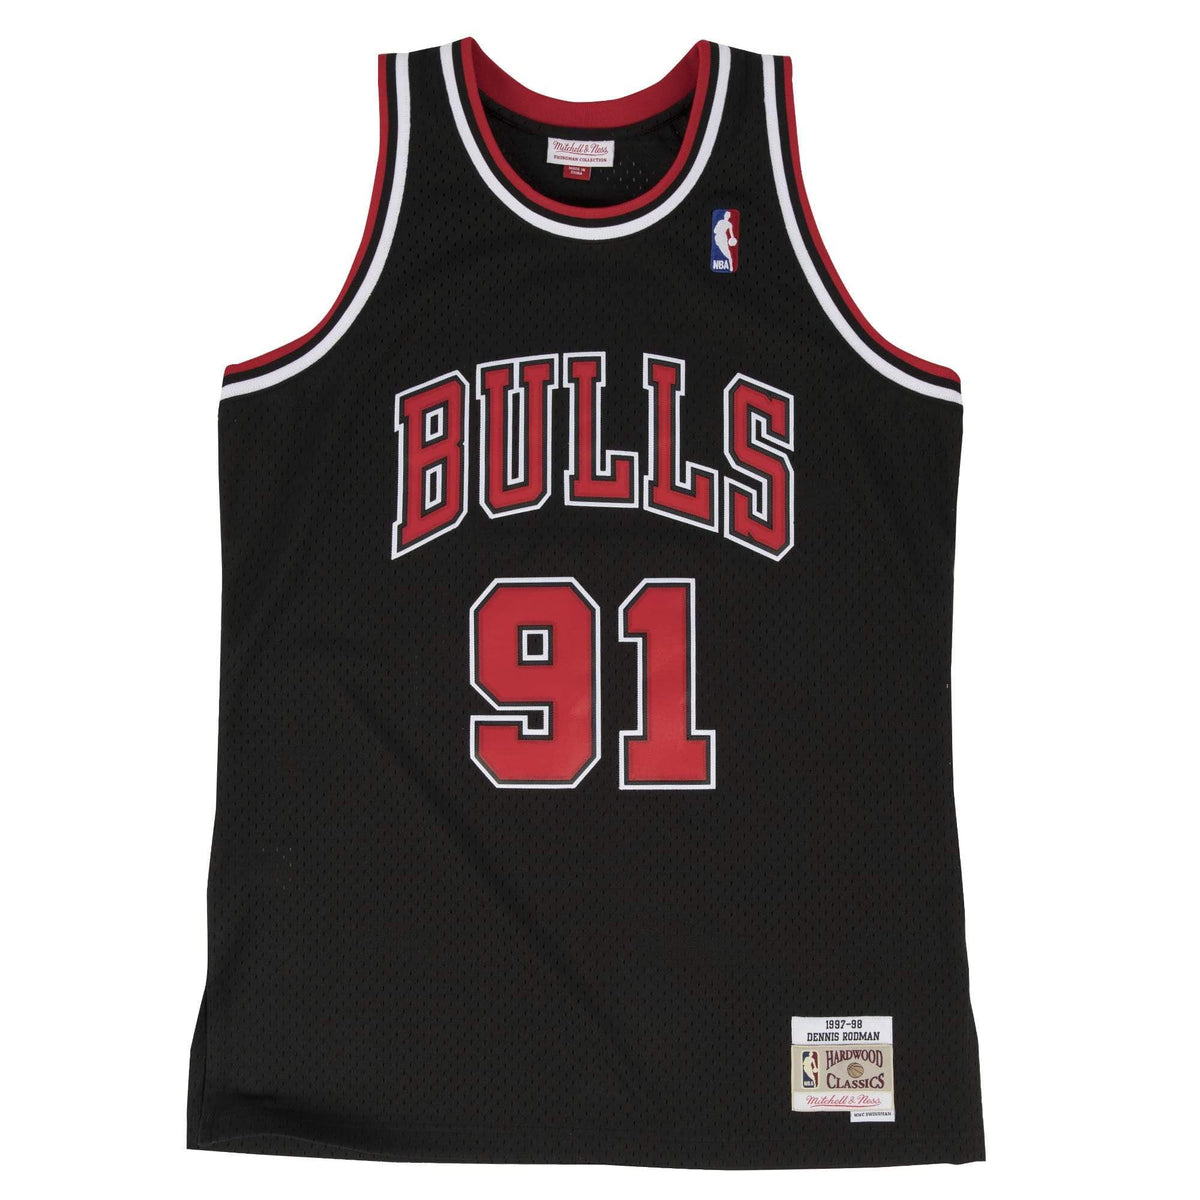 Mitchell & Ness Swingman Jersey Chicago Bulls Alternate 1997-98 Dennis Rodman M / Black